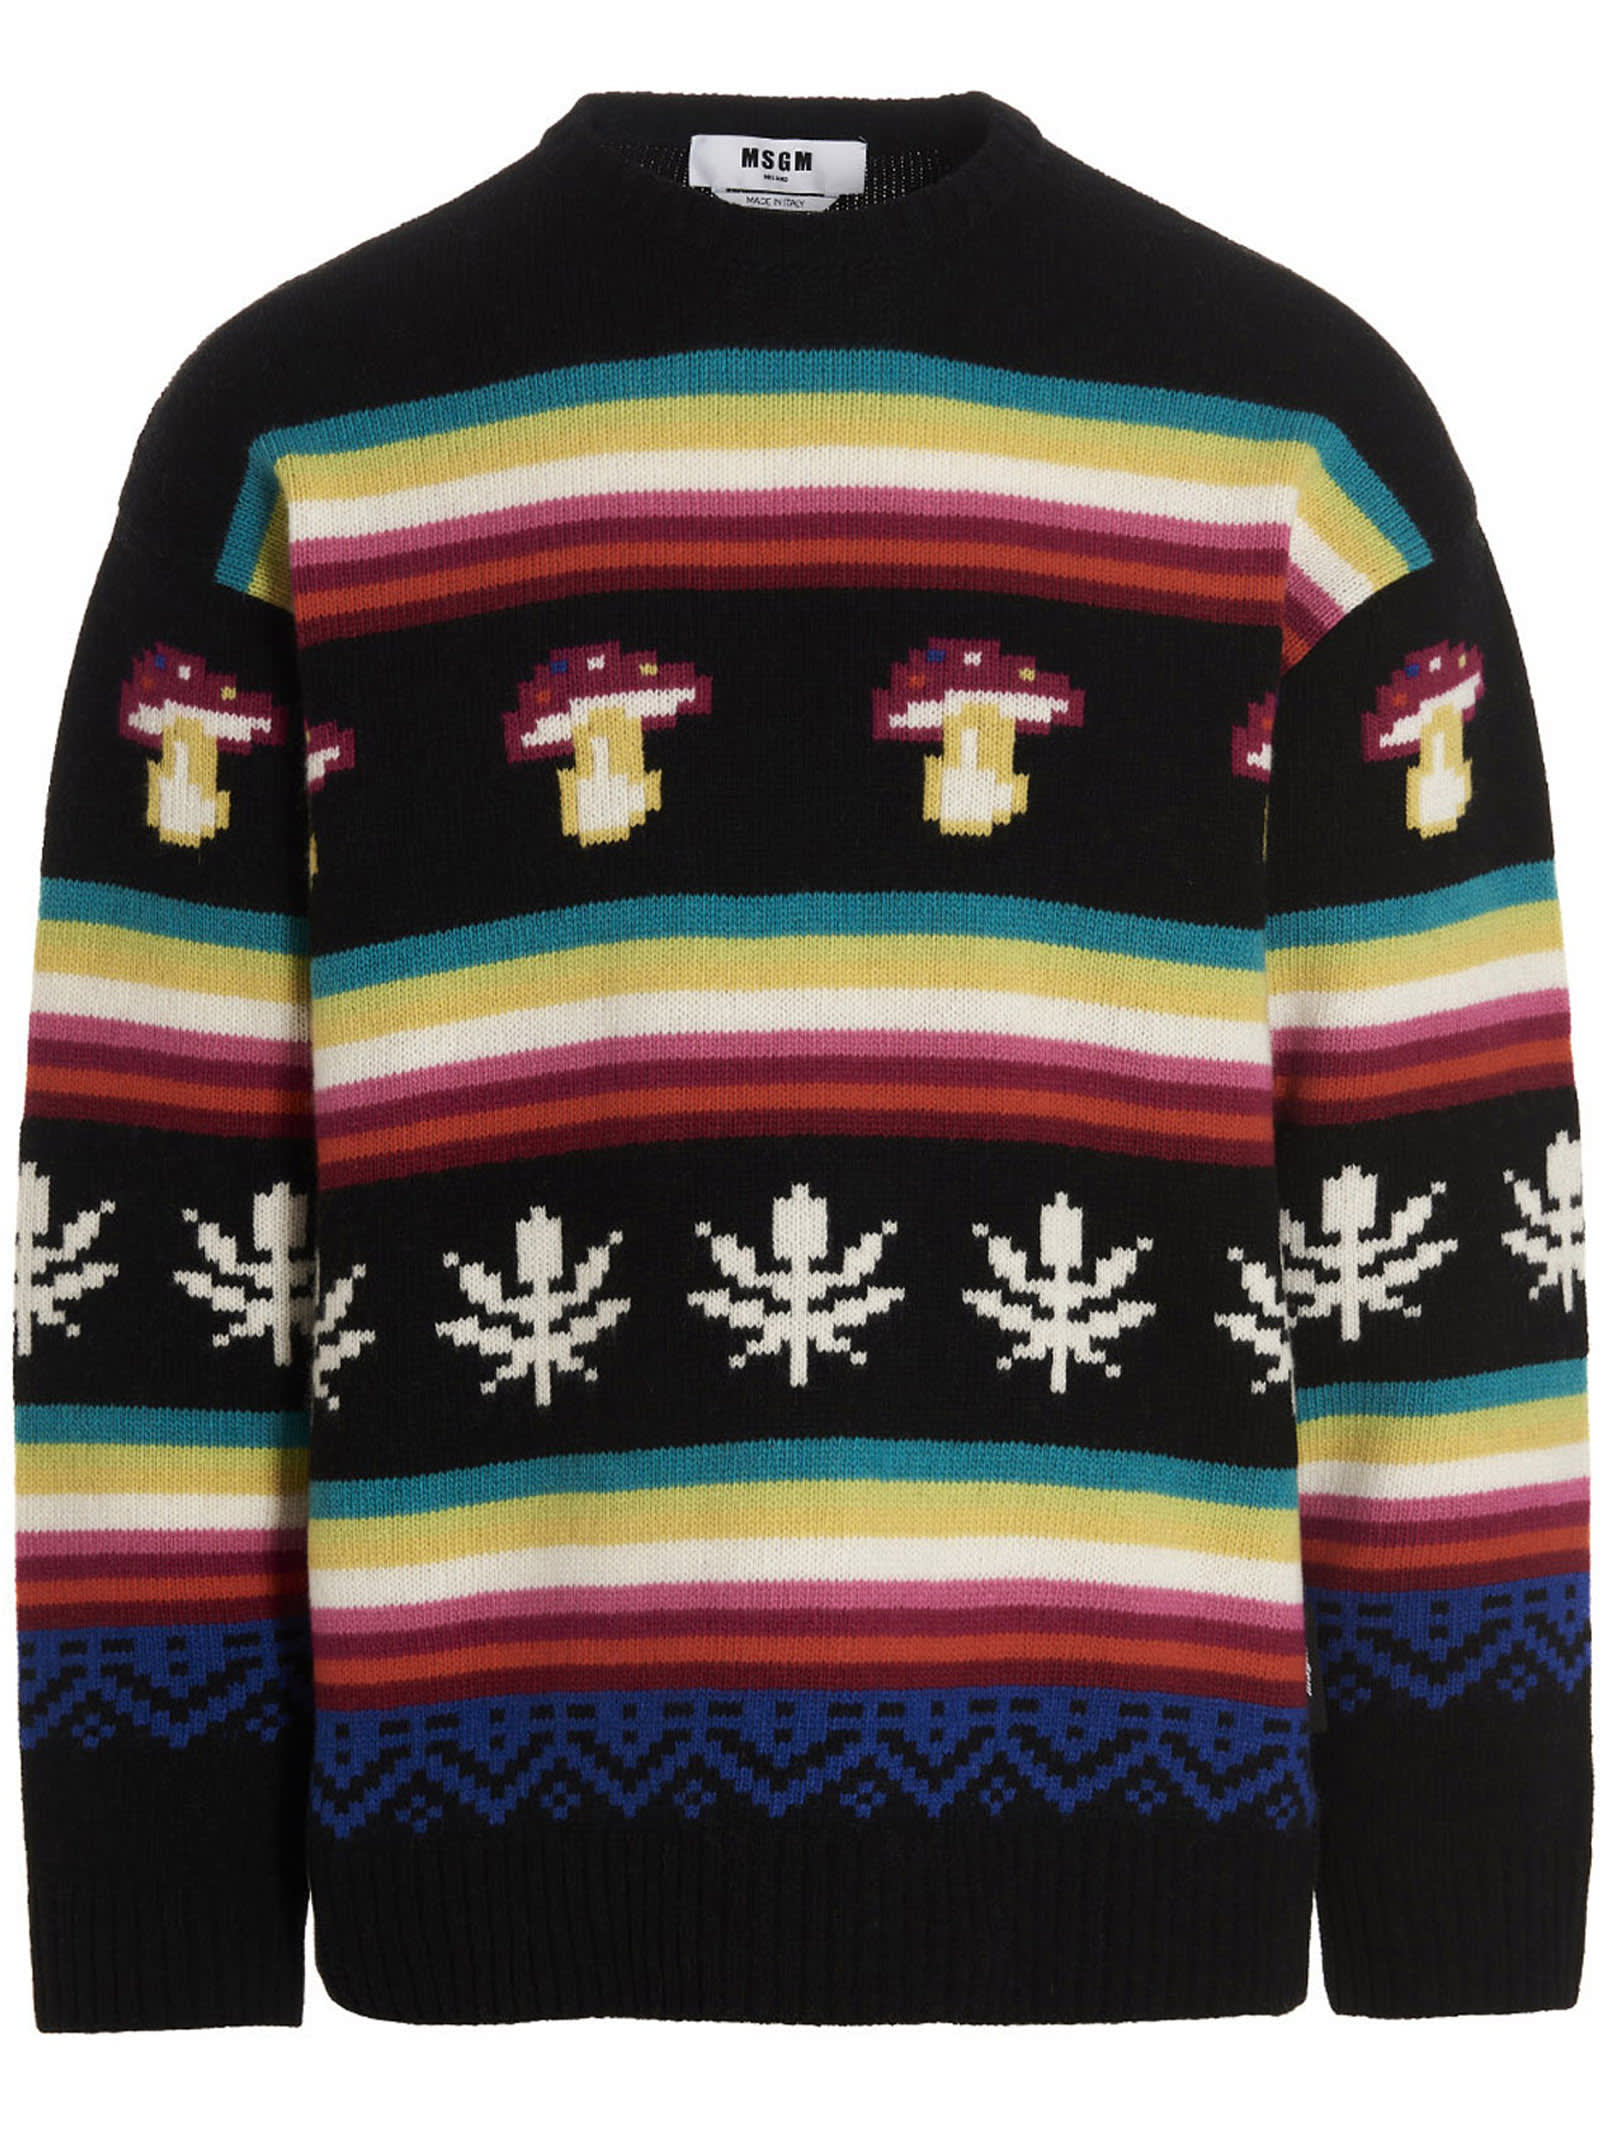 MSGM Jacquard Patterned Sweater